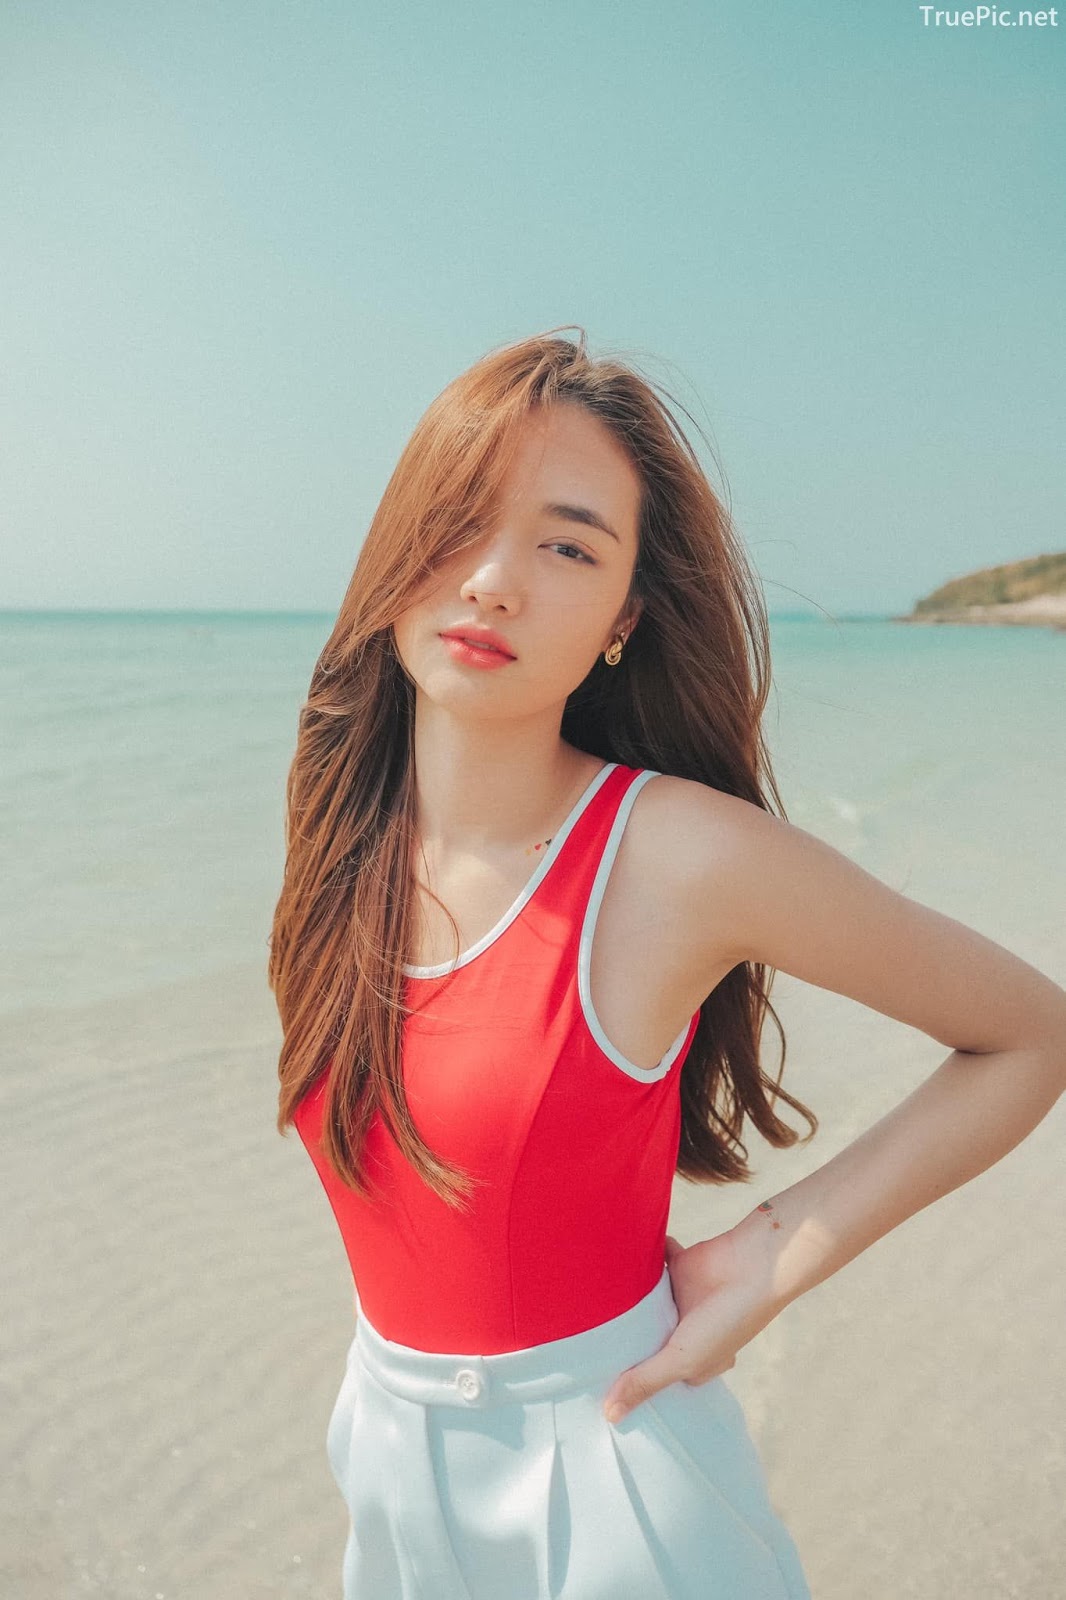 Miss Teen Thailand - Kanyarat Ruangrung - The Red Monokini On The Beach - TruePic.net - Picture 16